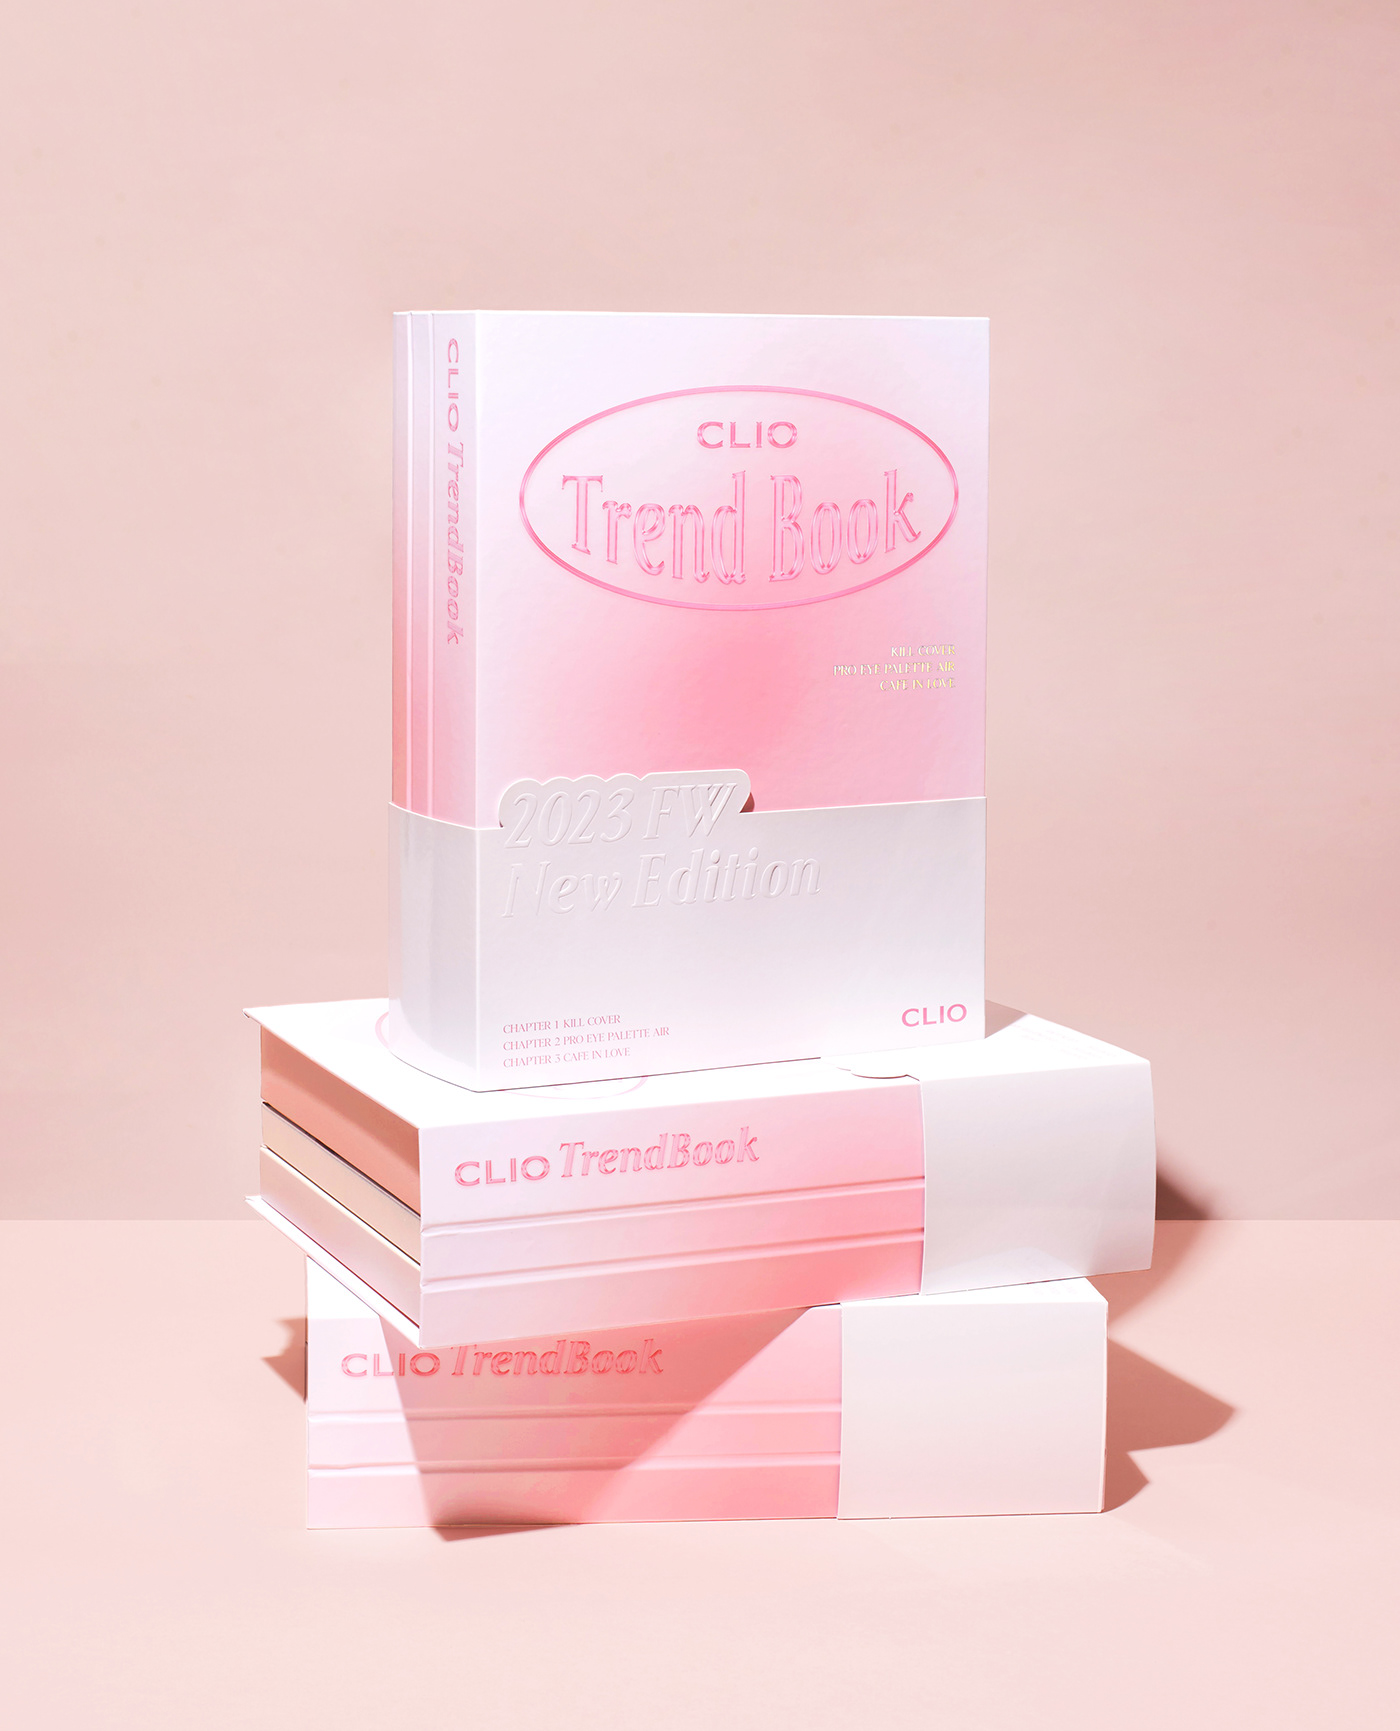 book Cosmetic beauty makeup lips lipstick Packaging pink INFLUENCER HEAZ